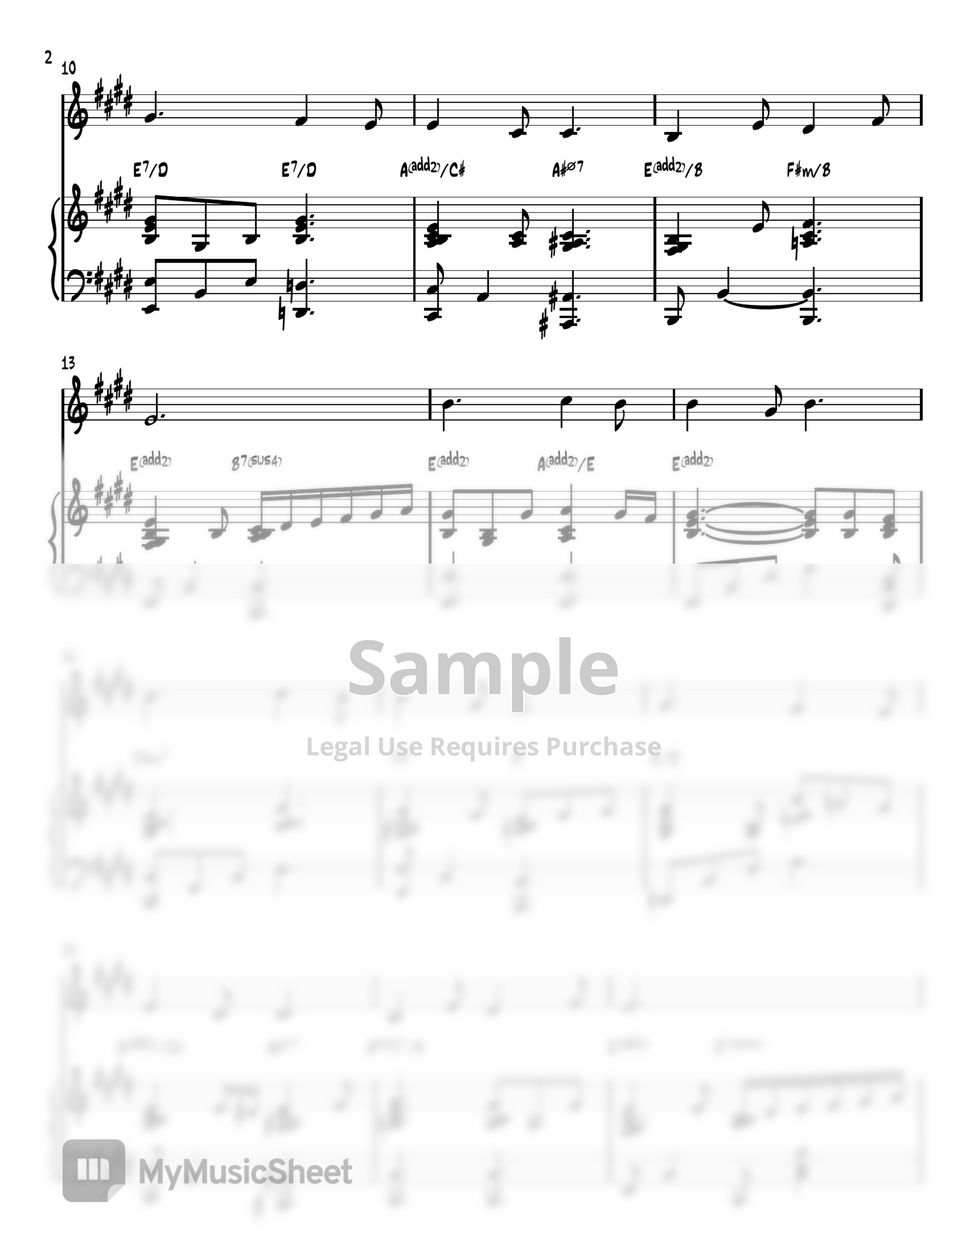 Hymn - Nearer My God To Thee( AccompanyE-F key) (Jazz Ver) by MIWHA